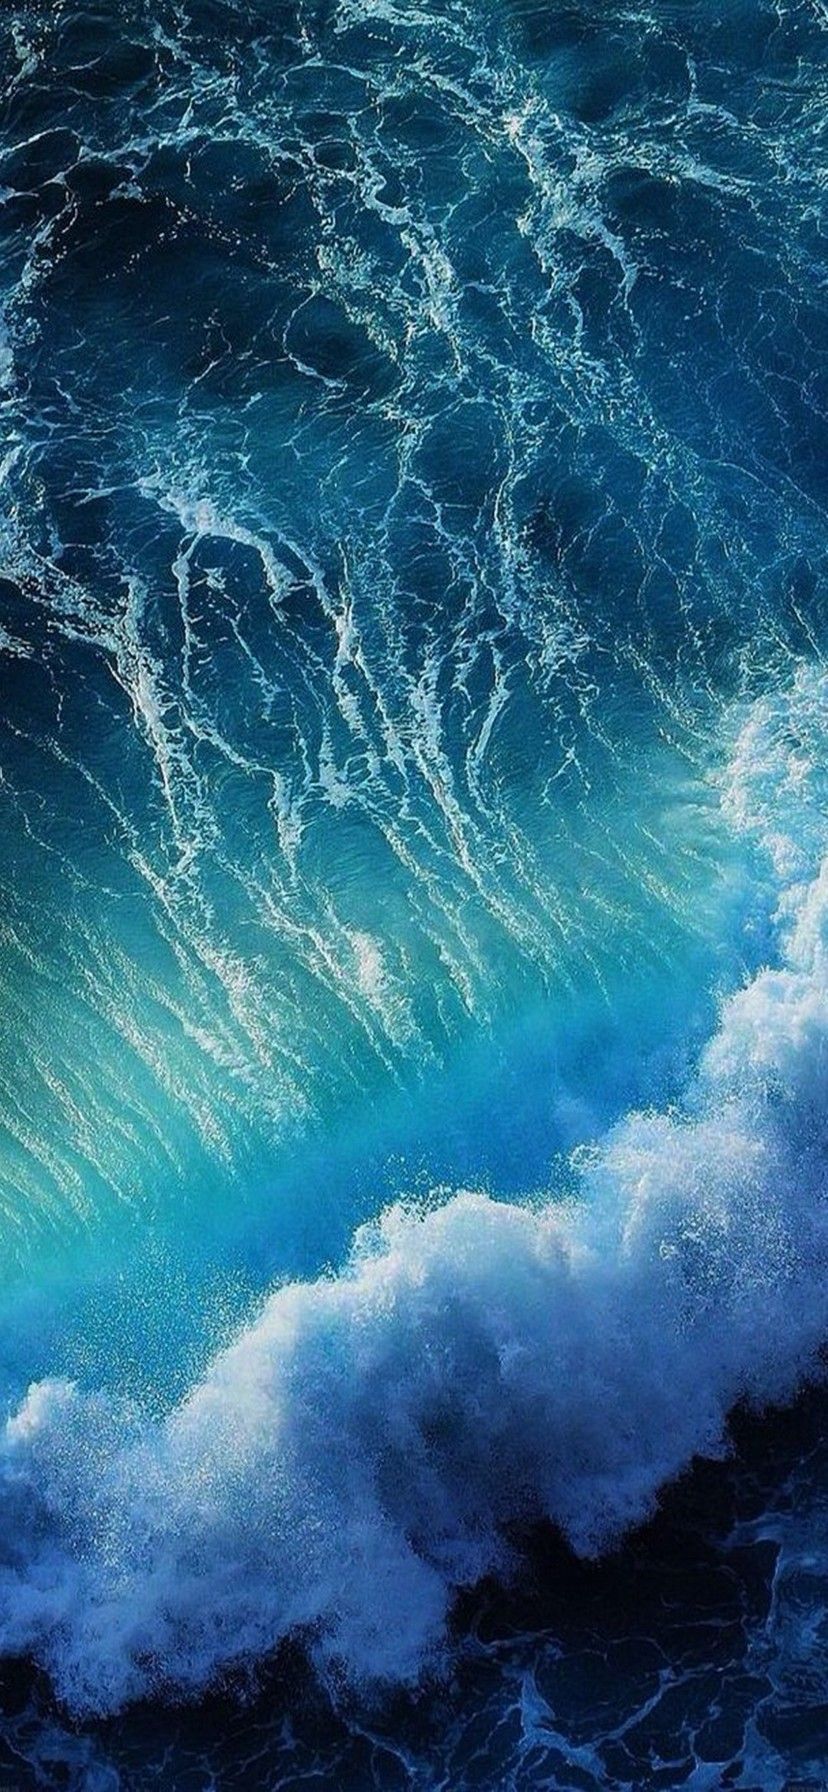 iPhone 11 Wallpaper HD 4k Download. Ocean wallpaper, Waves wallpaper, Ocean waves